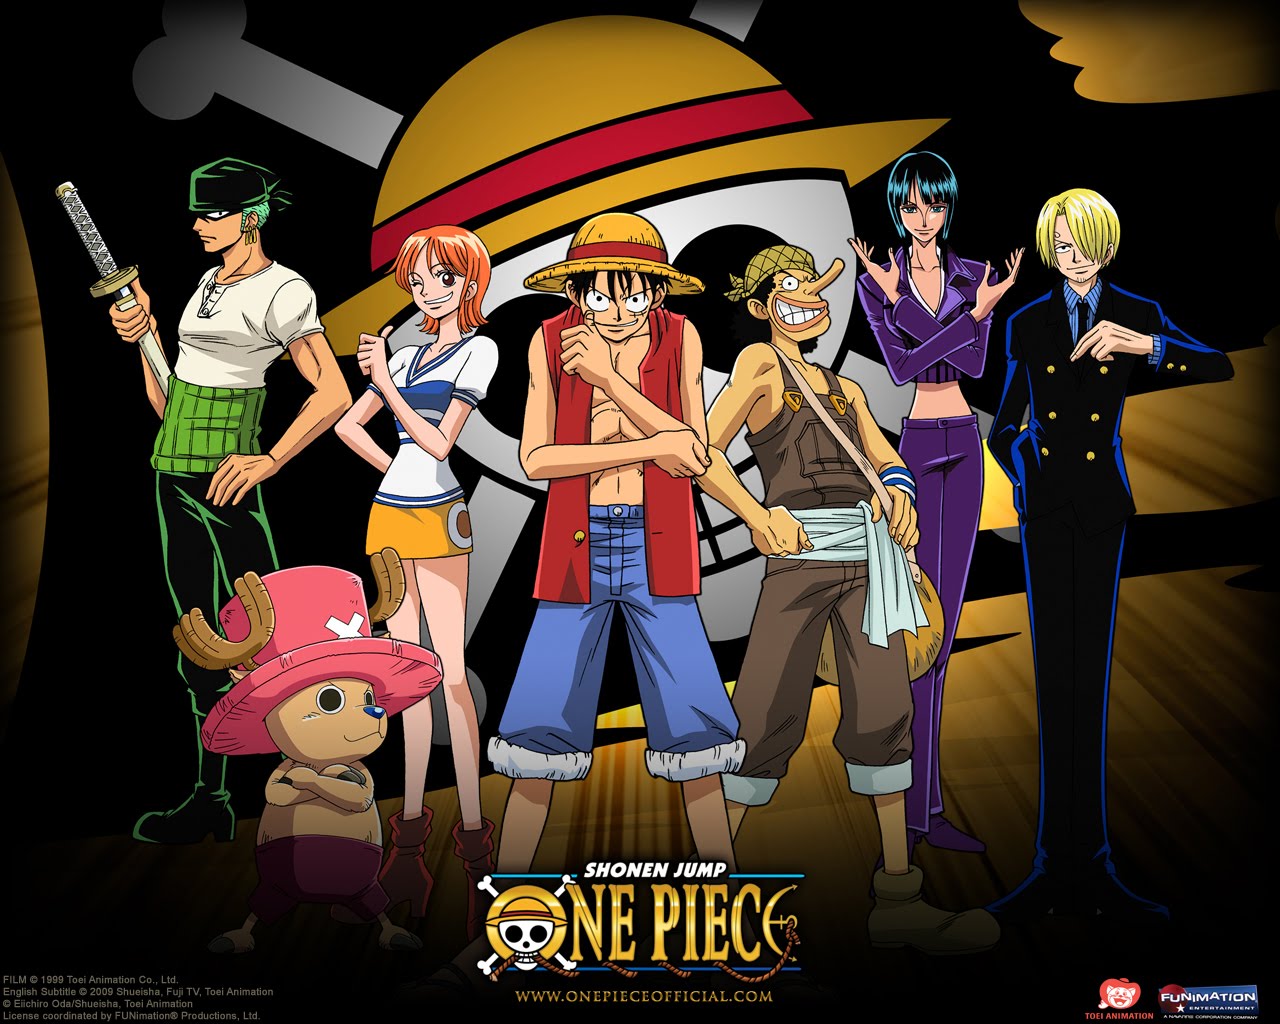 Ace One Piece iPhone Wallpapers - Top Những Hình Ảnh Đẹp